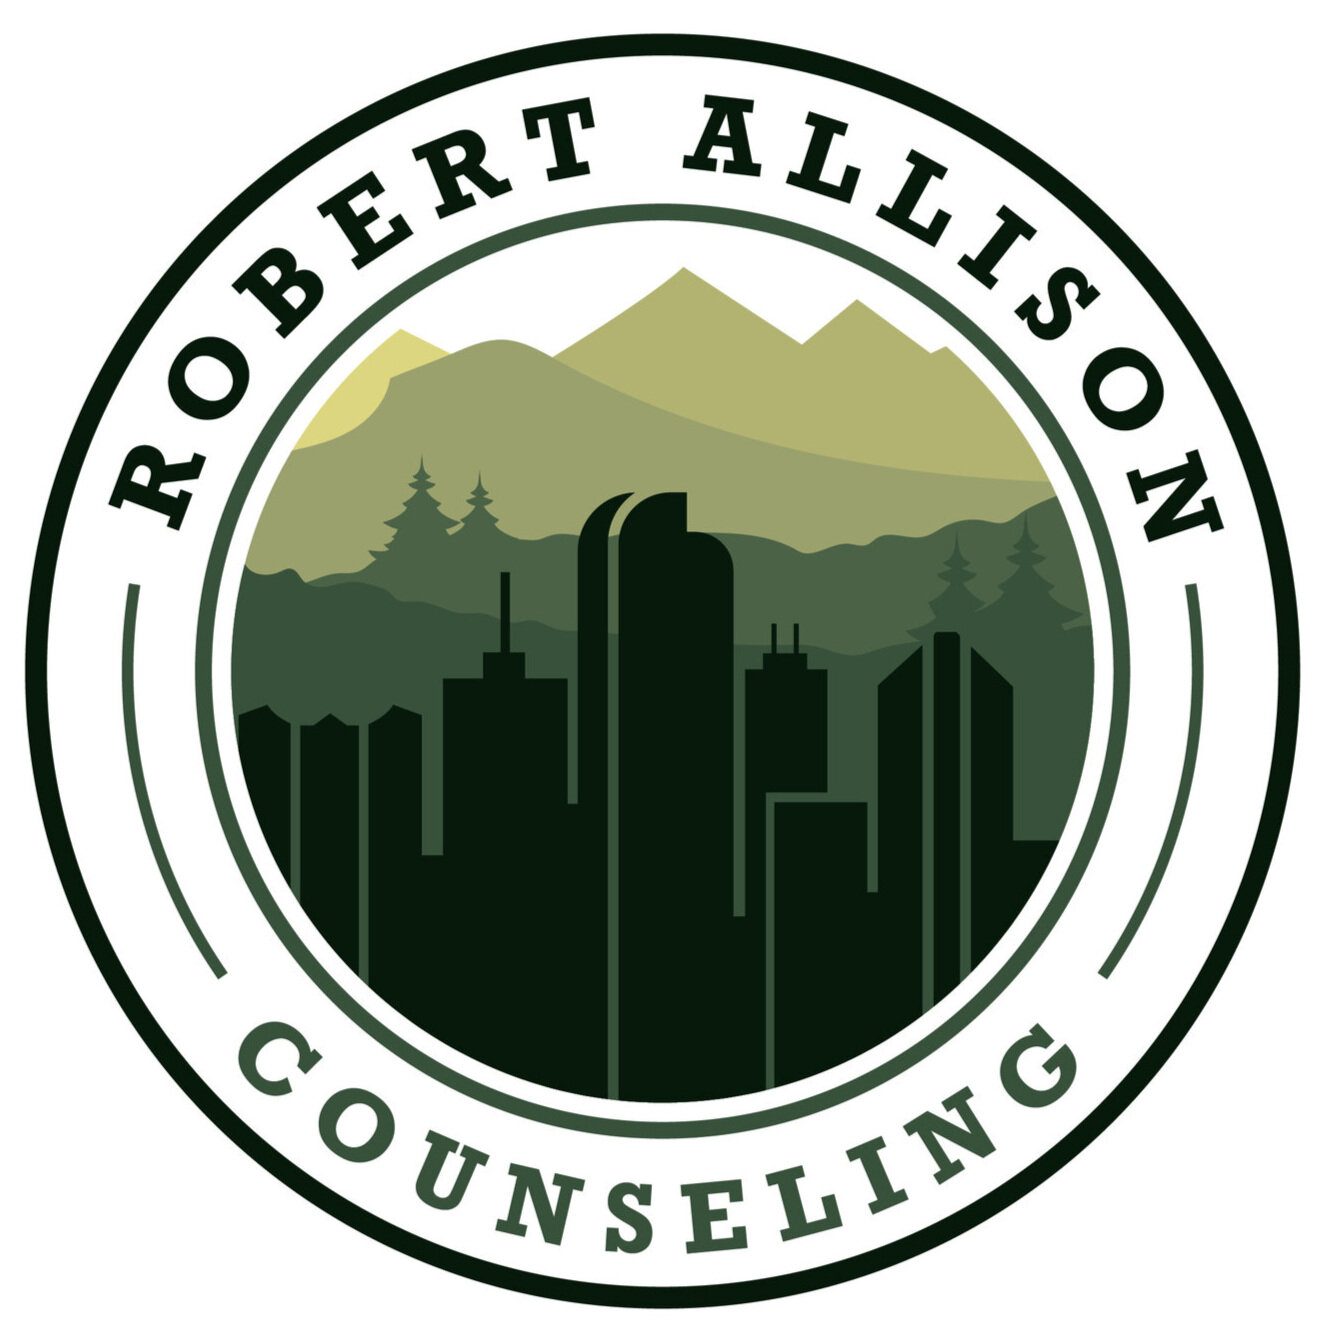 Robert Allison Counseling